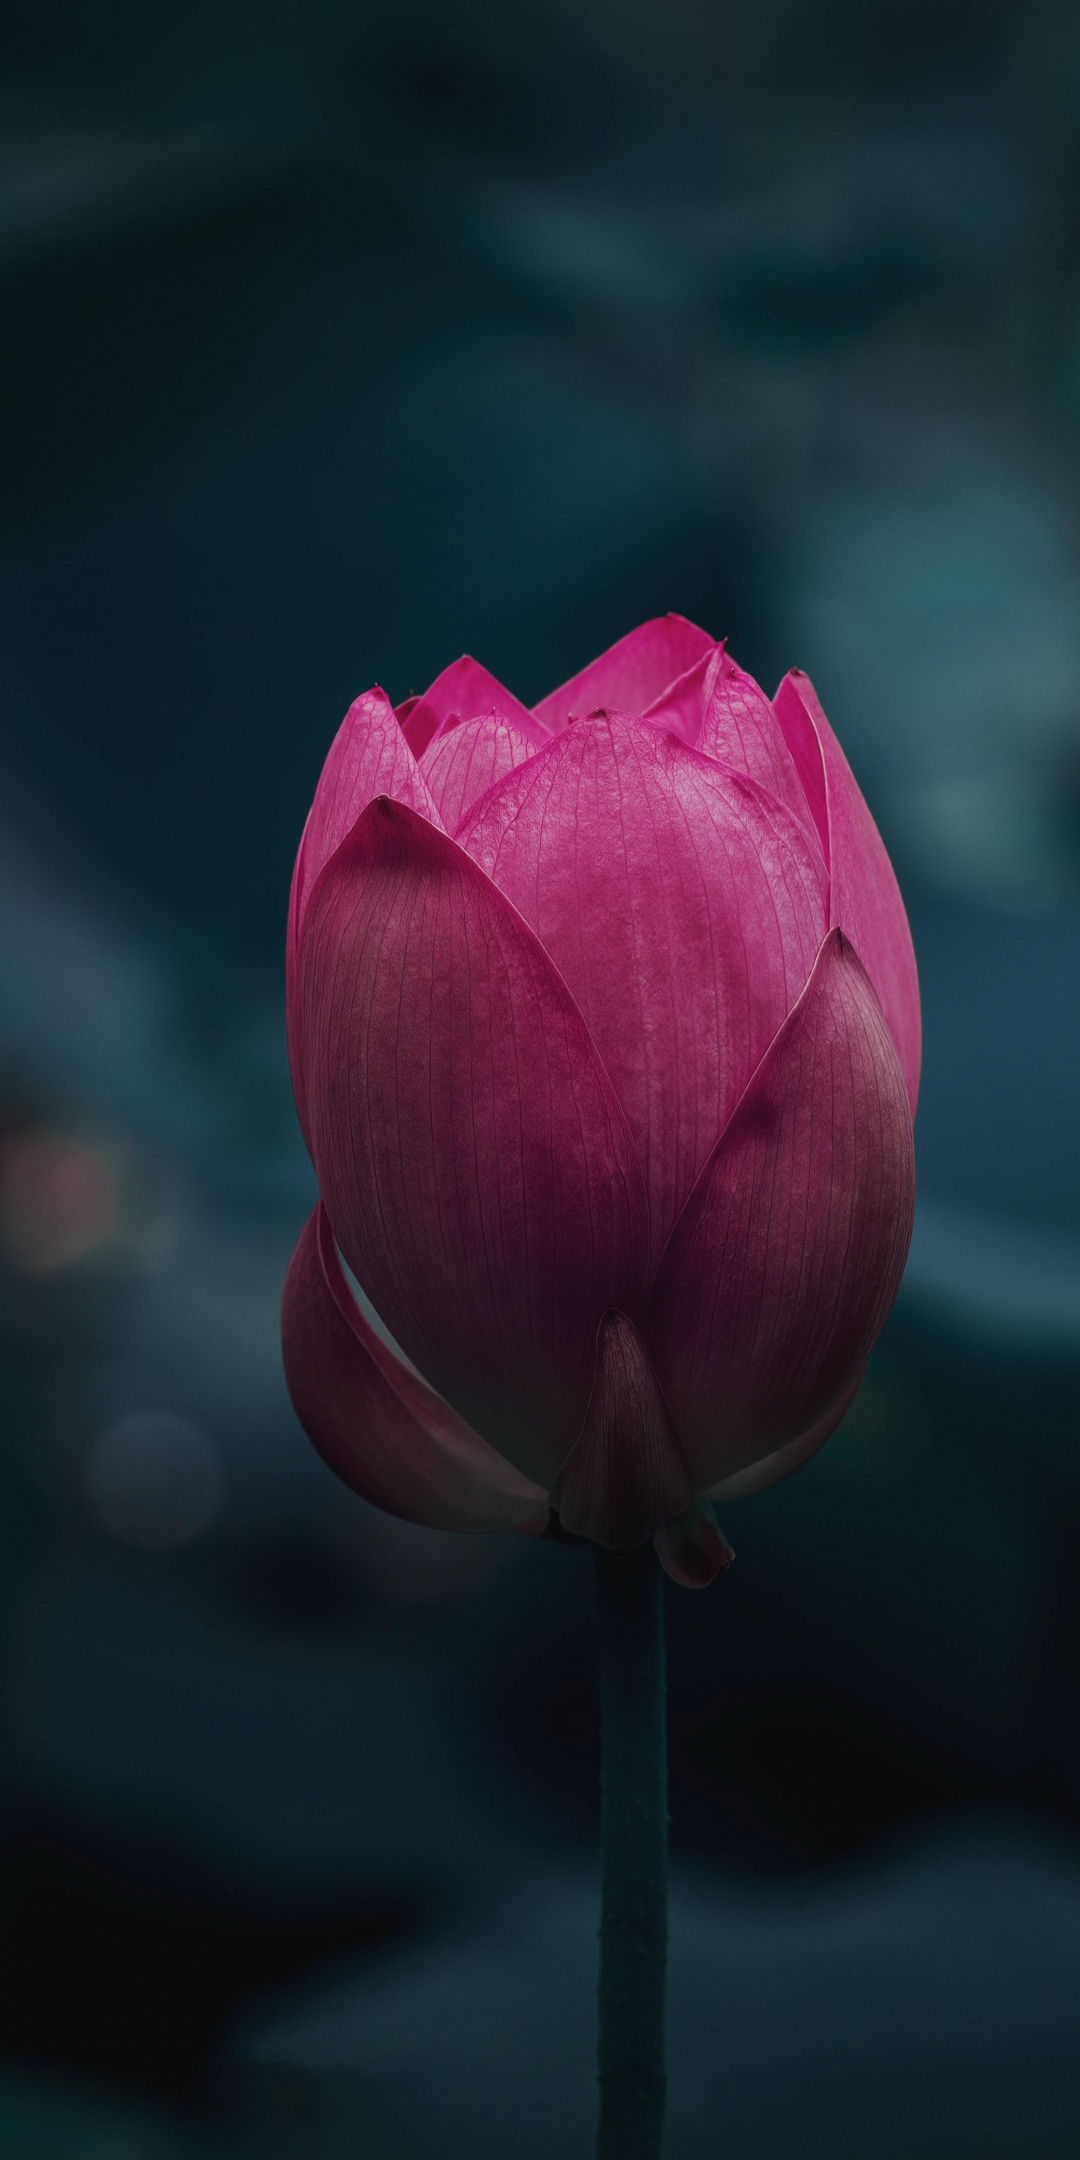 Flower bloom, pink lotus, portrait, 1080x2160 wallpaper